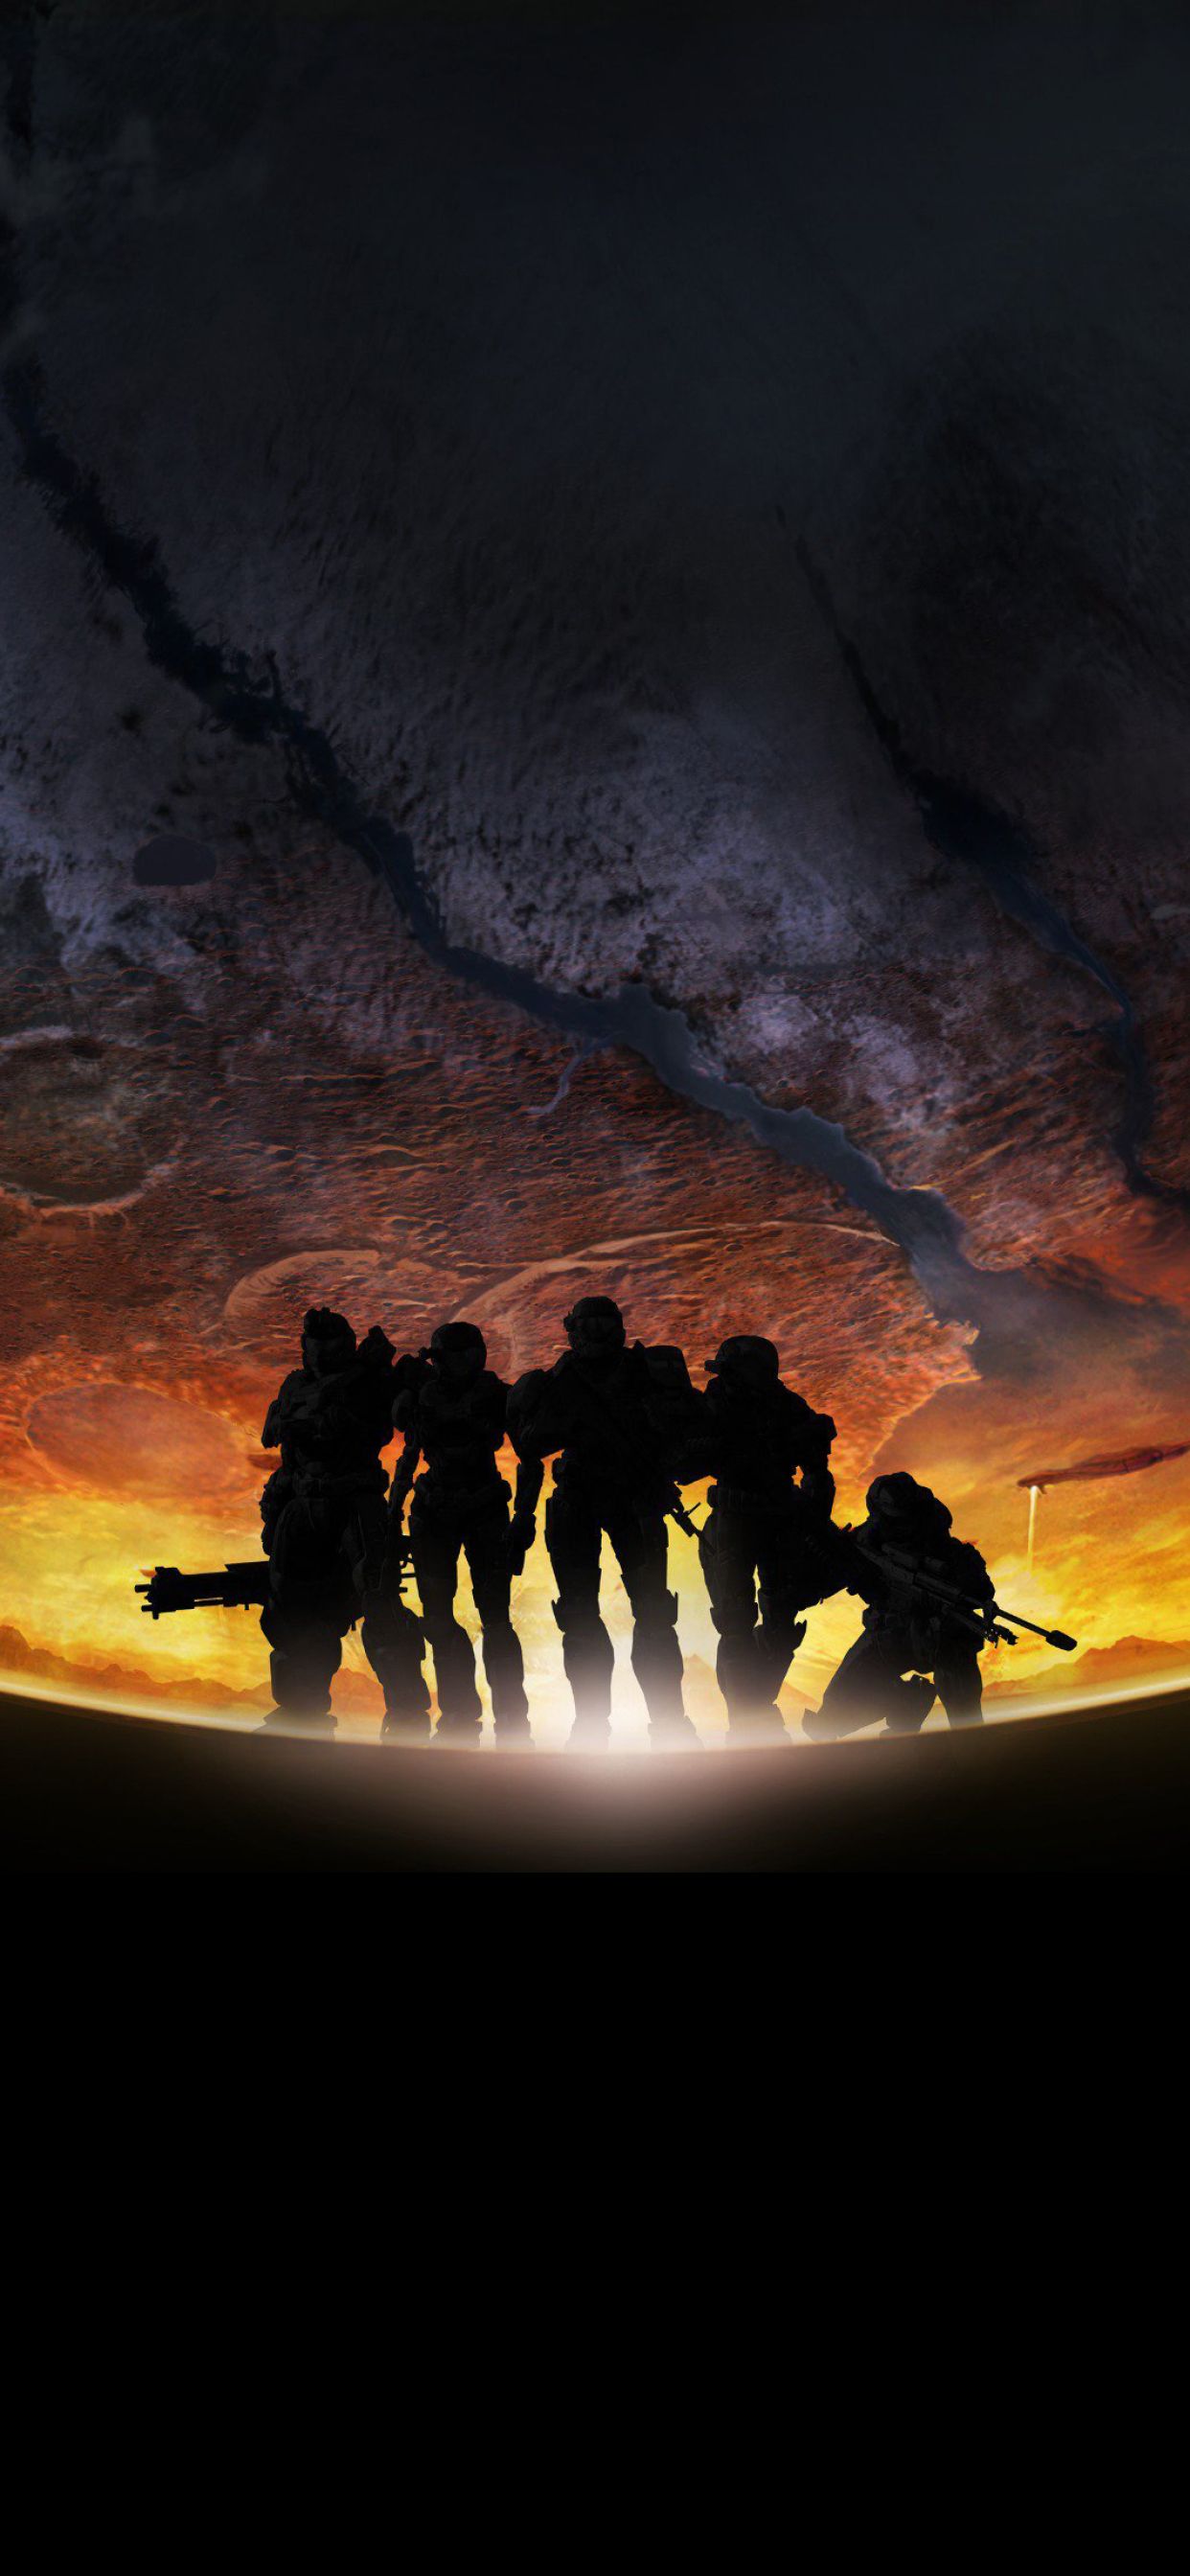 Halo Reach 4K iPhone XS MAX Wallpaper, HD Games 4K